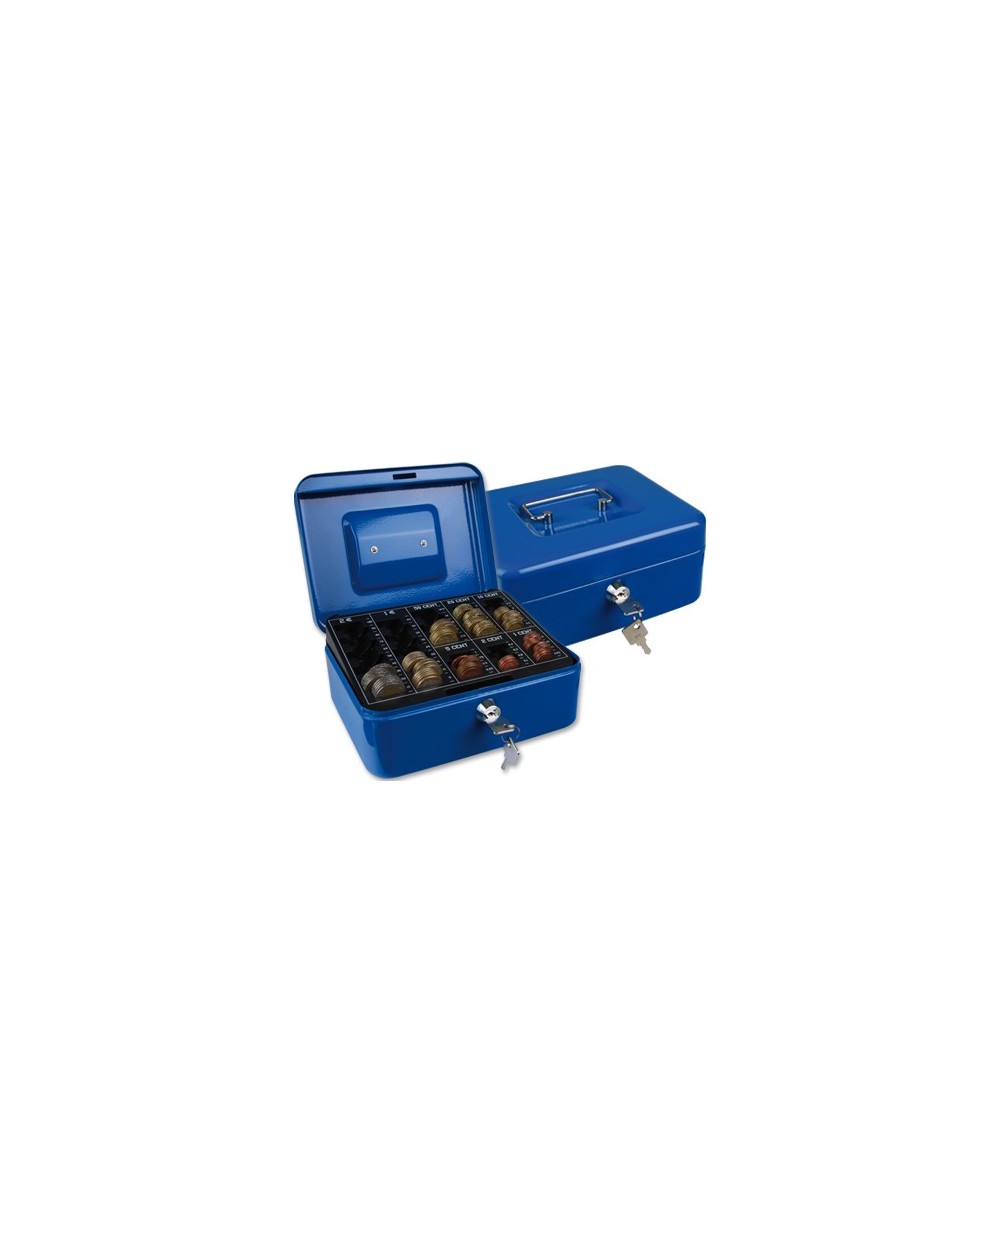 Caja caudales q connect 8 200x160x90 mm azul con portamonedas